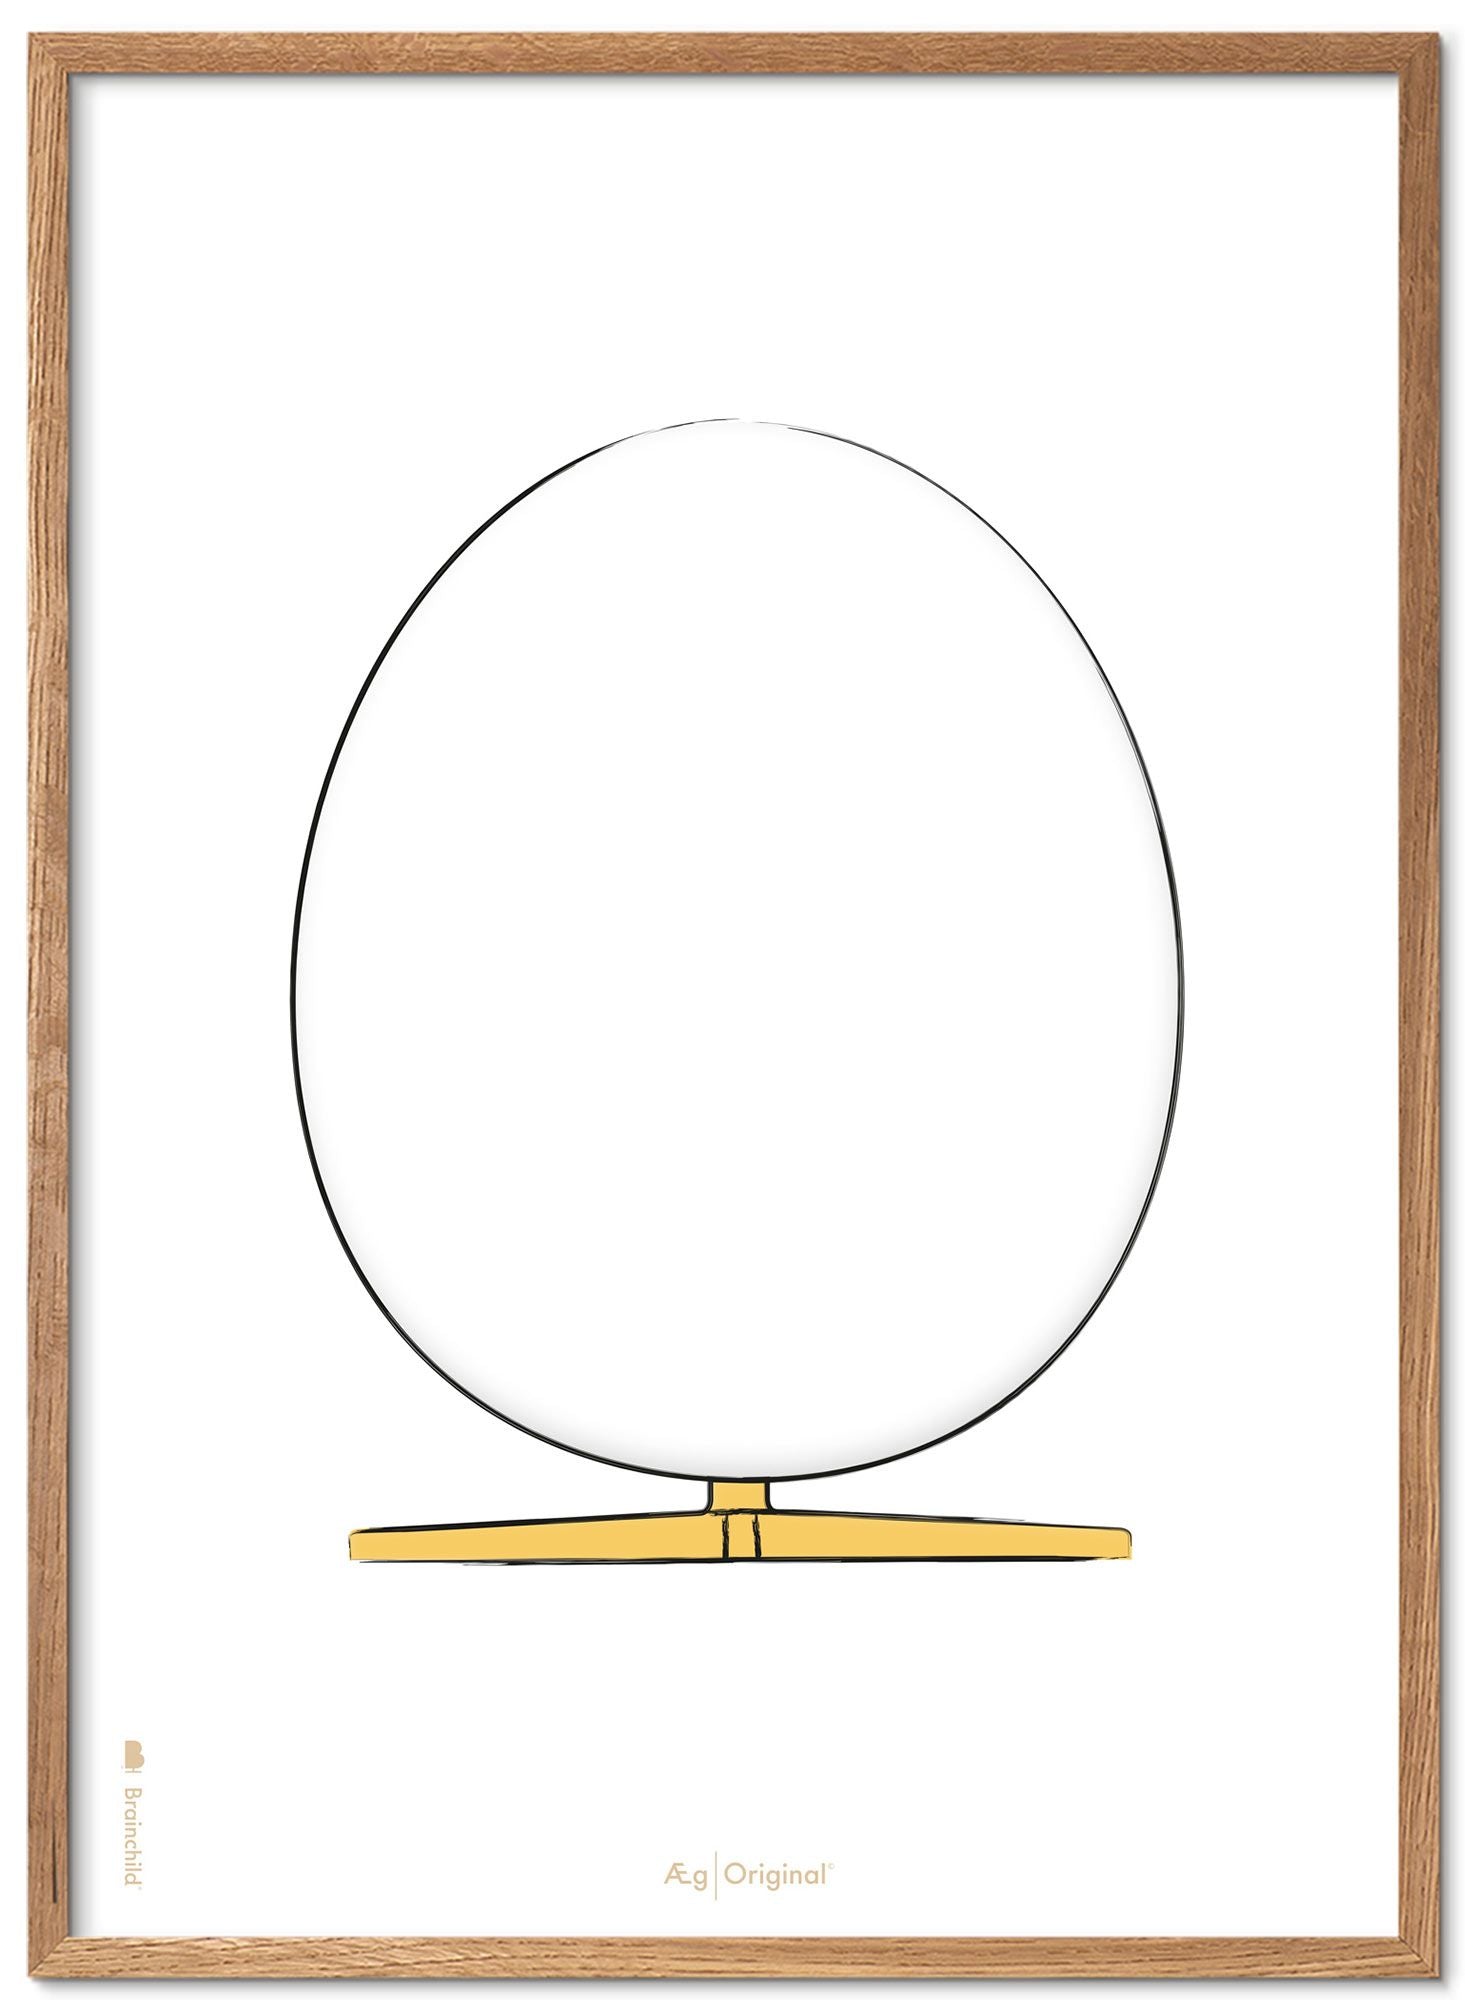 Brainchild The Egg Design Sketch Poster Frame Made Of Light Wood 50x70 Cm, White Background